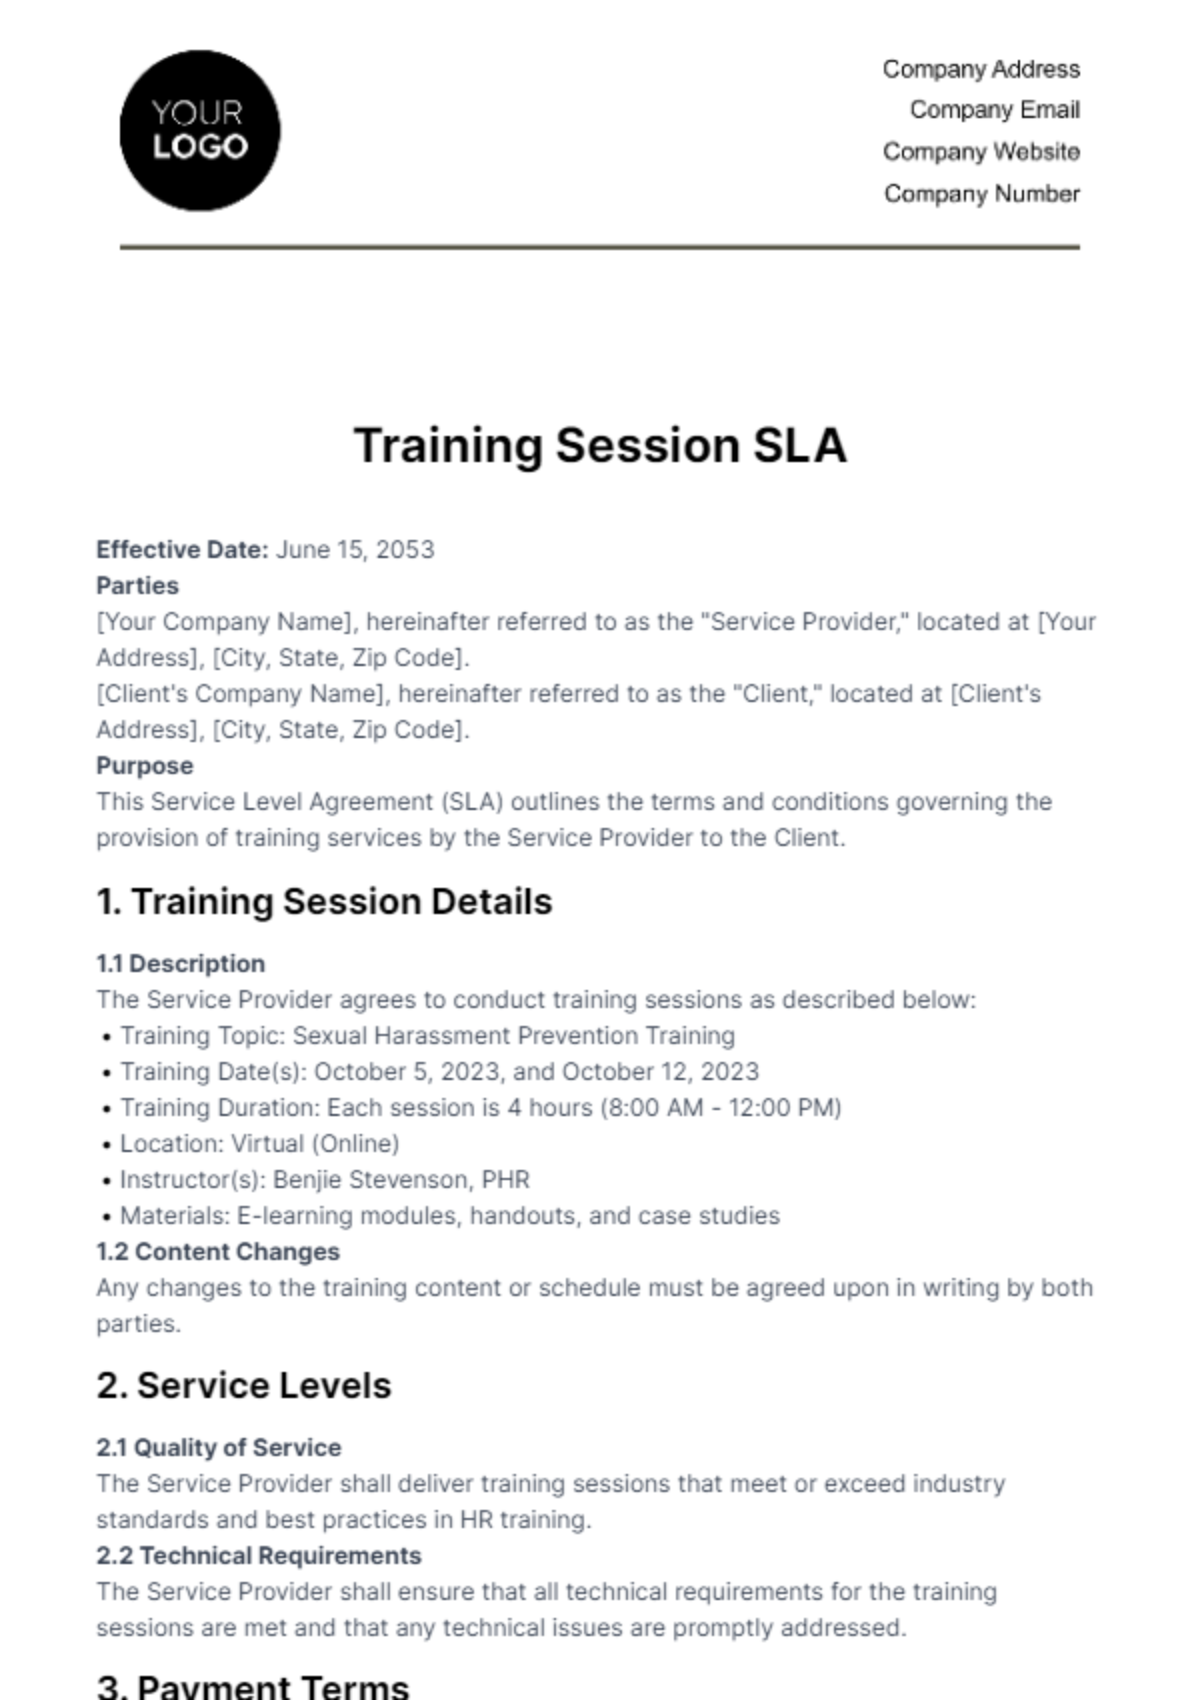 Training Session SLA HR Template